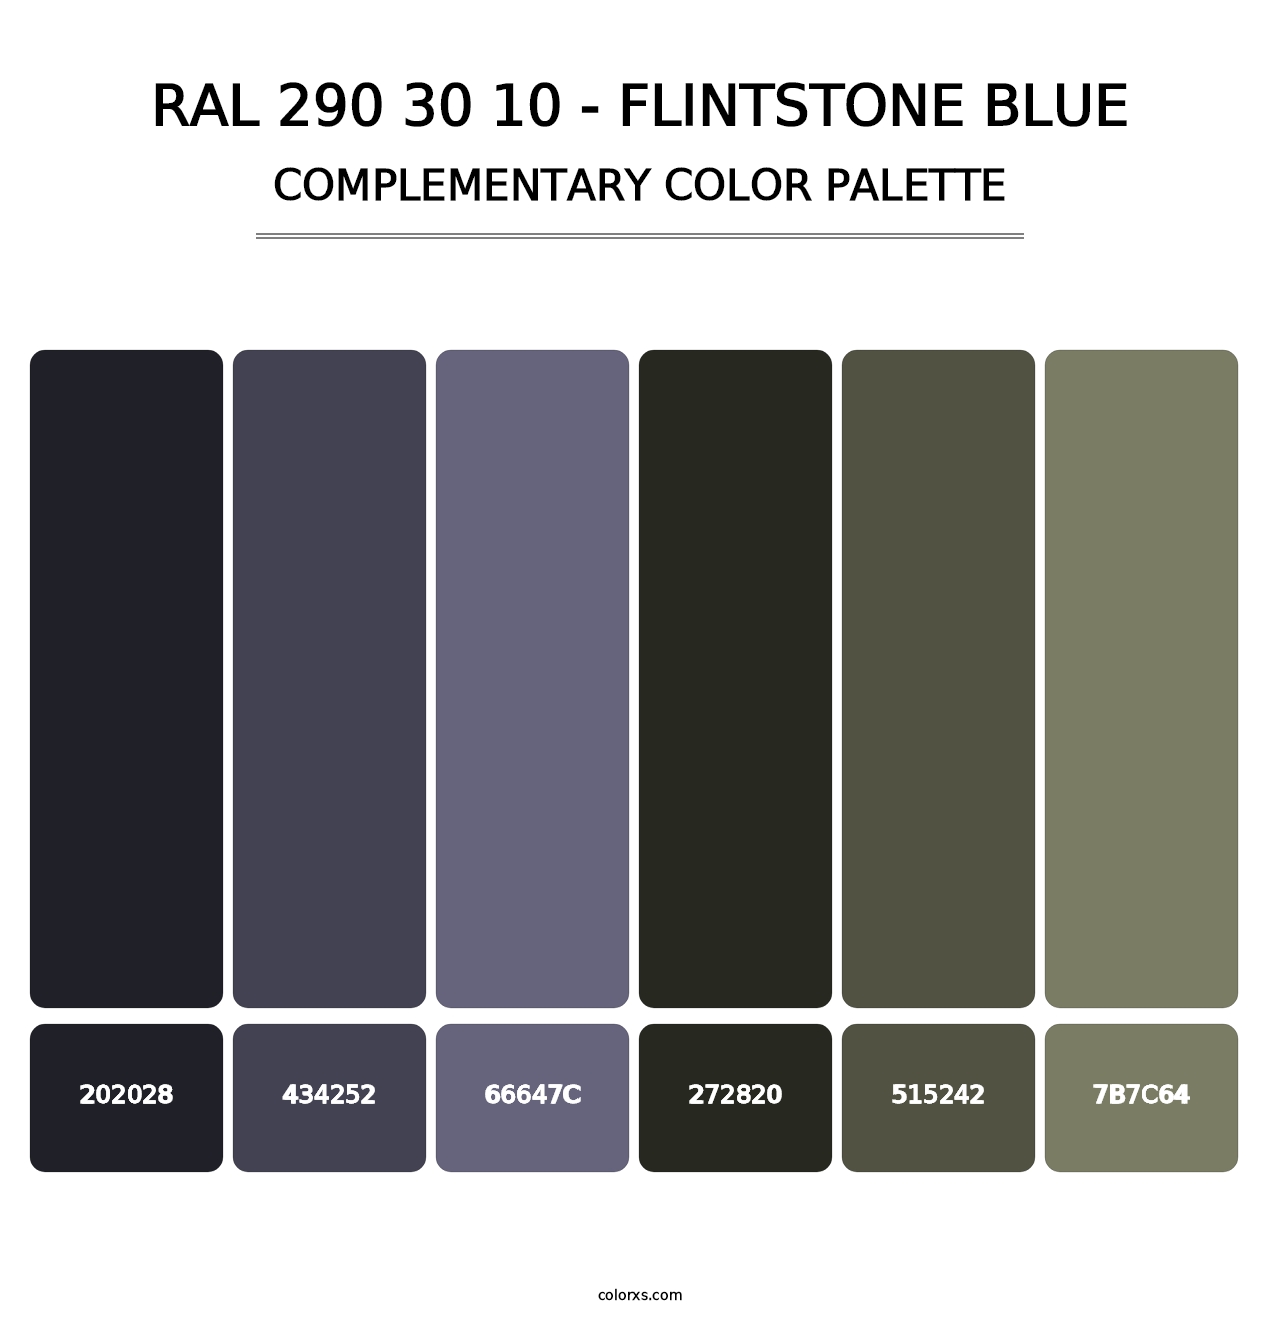 RAL 290 30 10 - Flintstone Blue - Complementary Color Palette